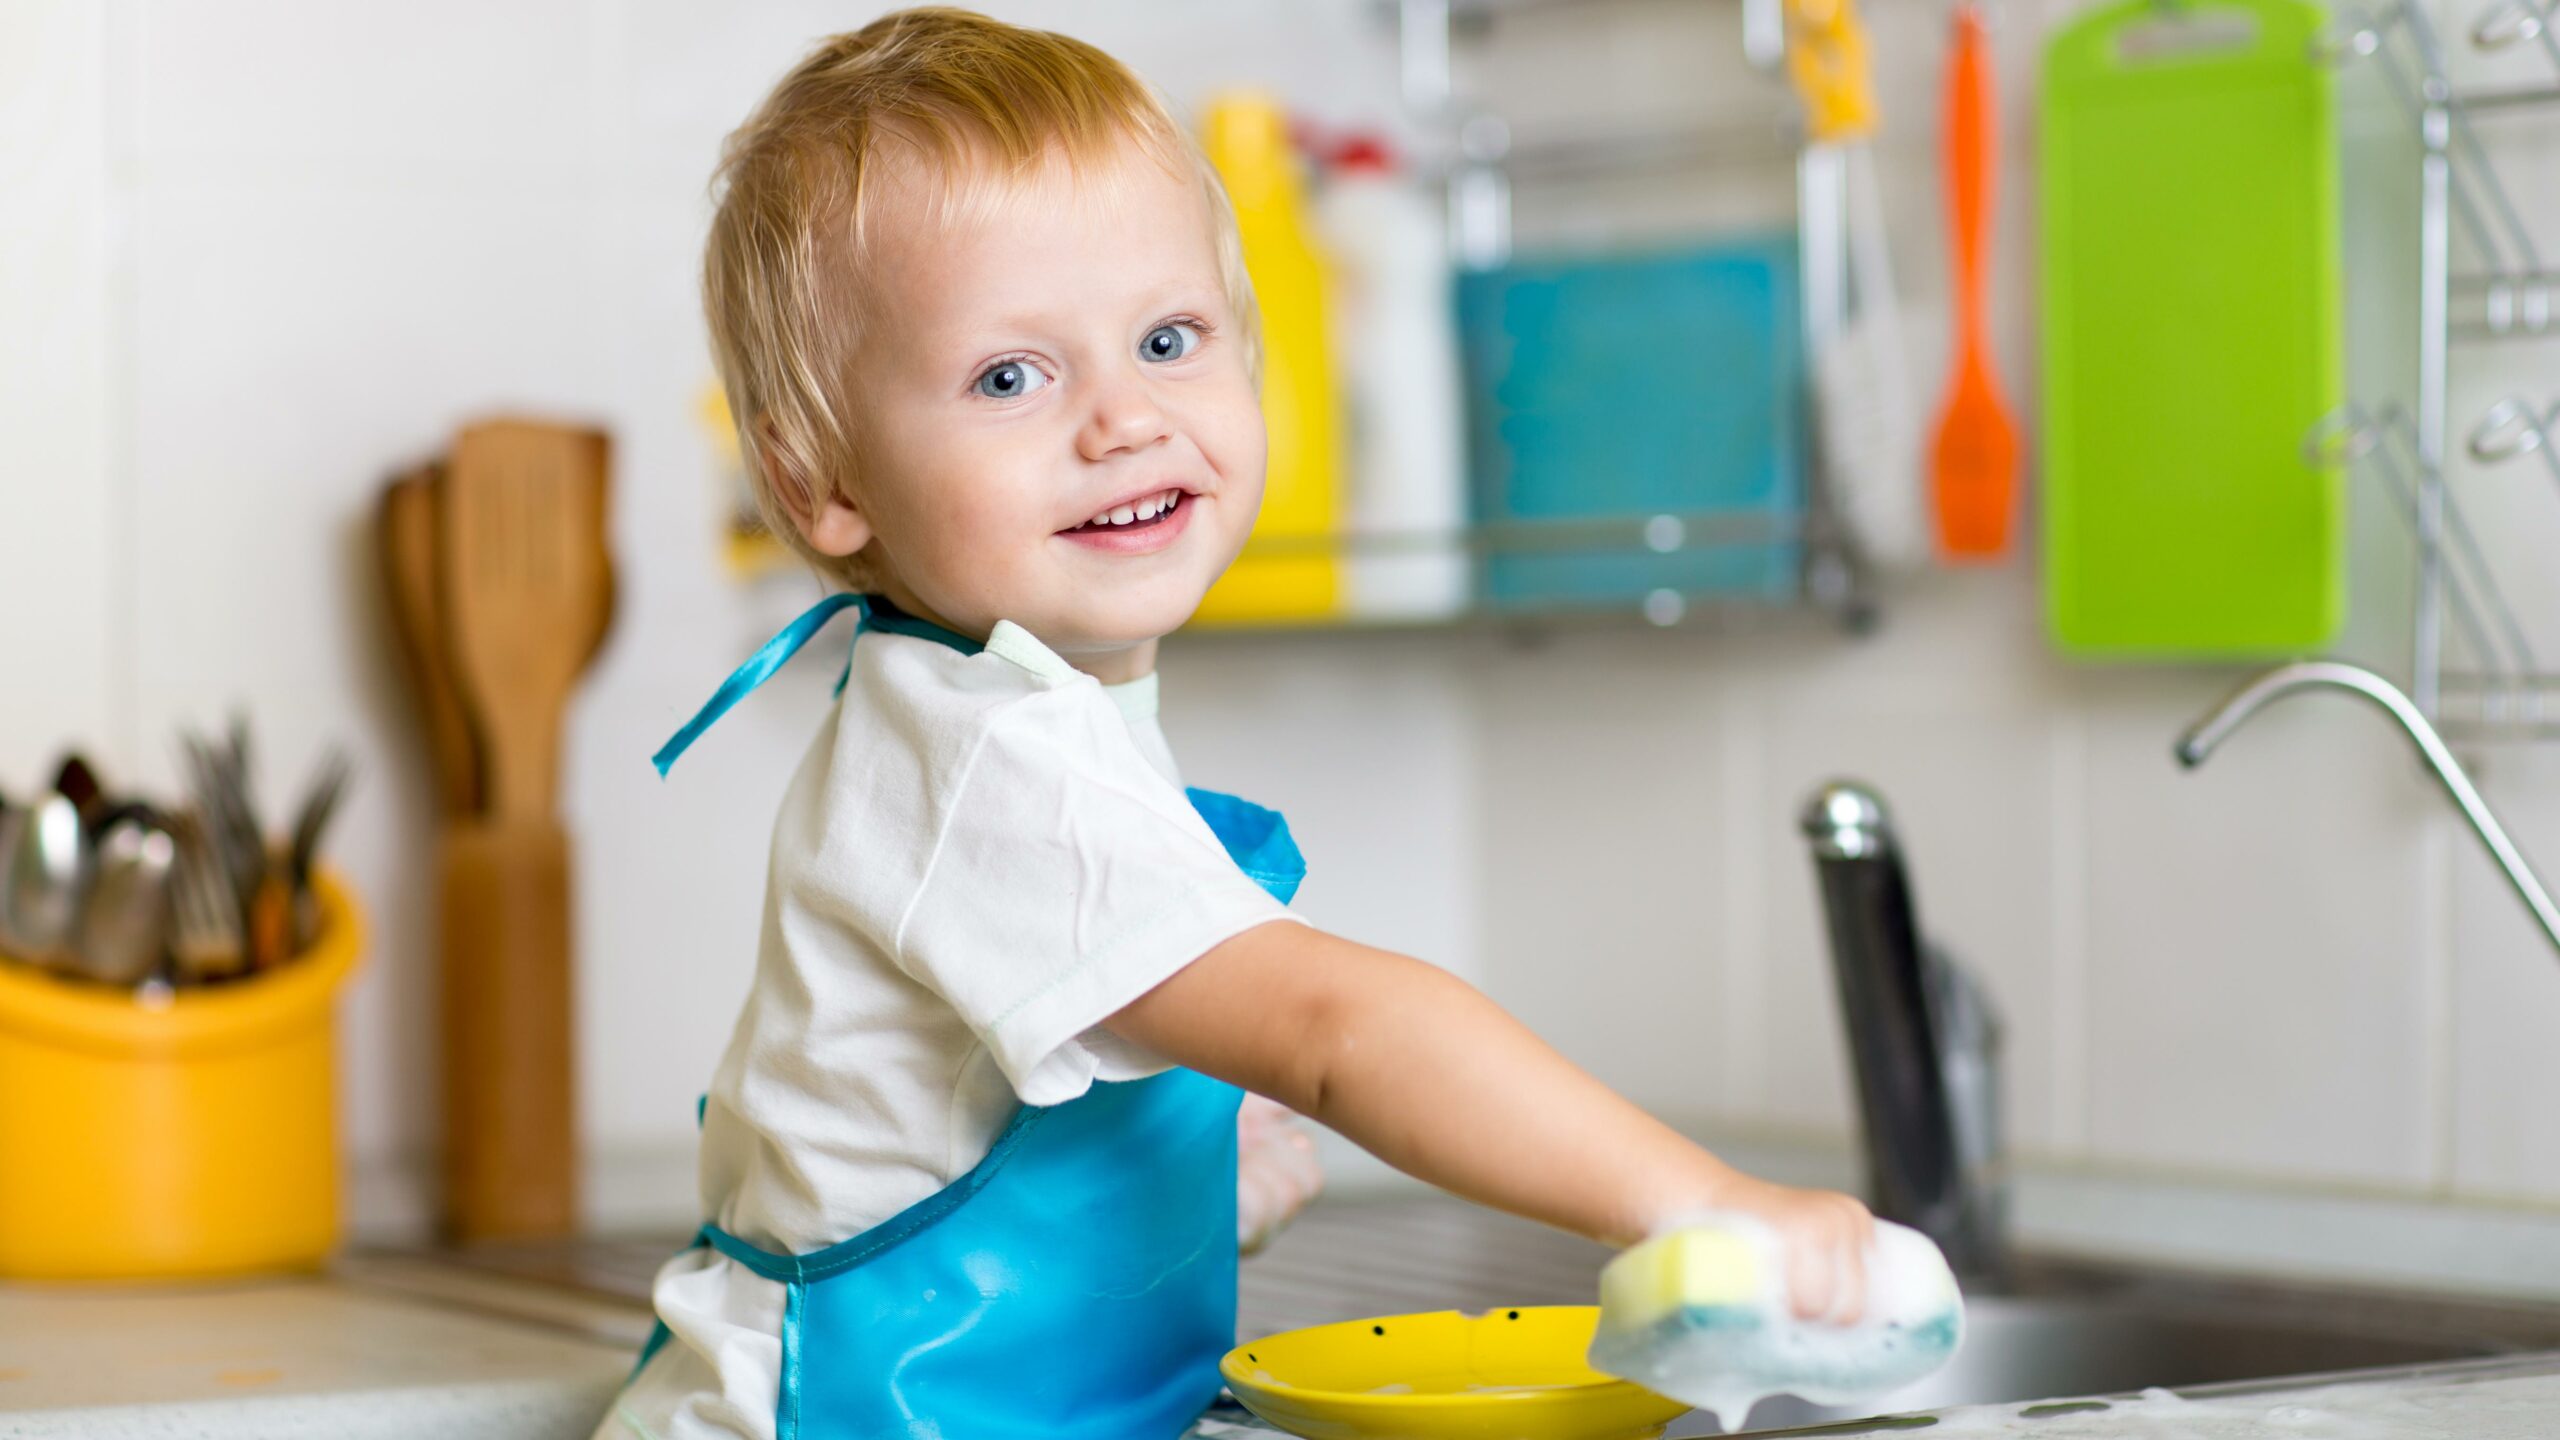 Toddler Washing Dishes In Sink